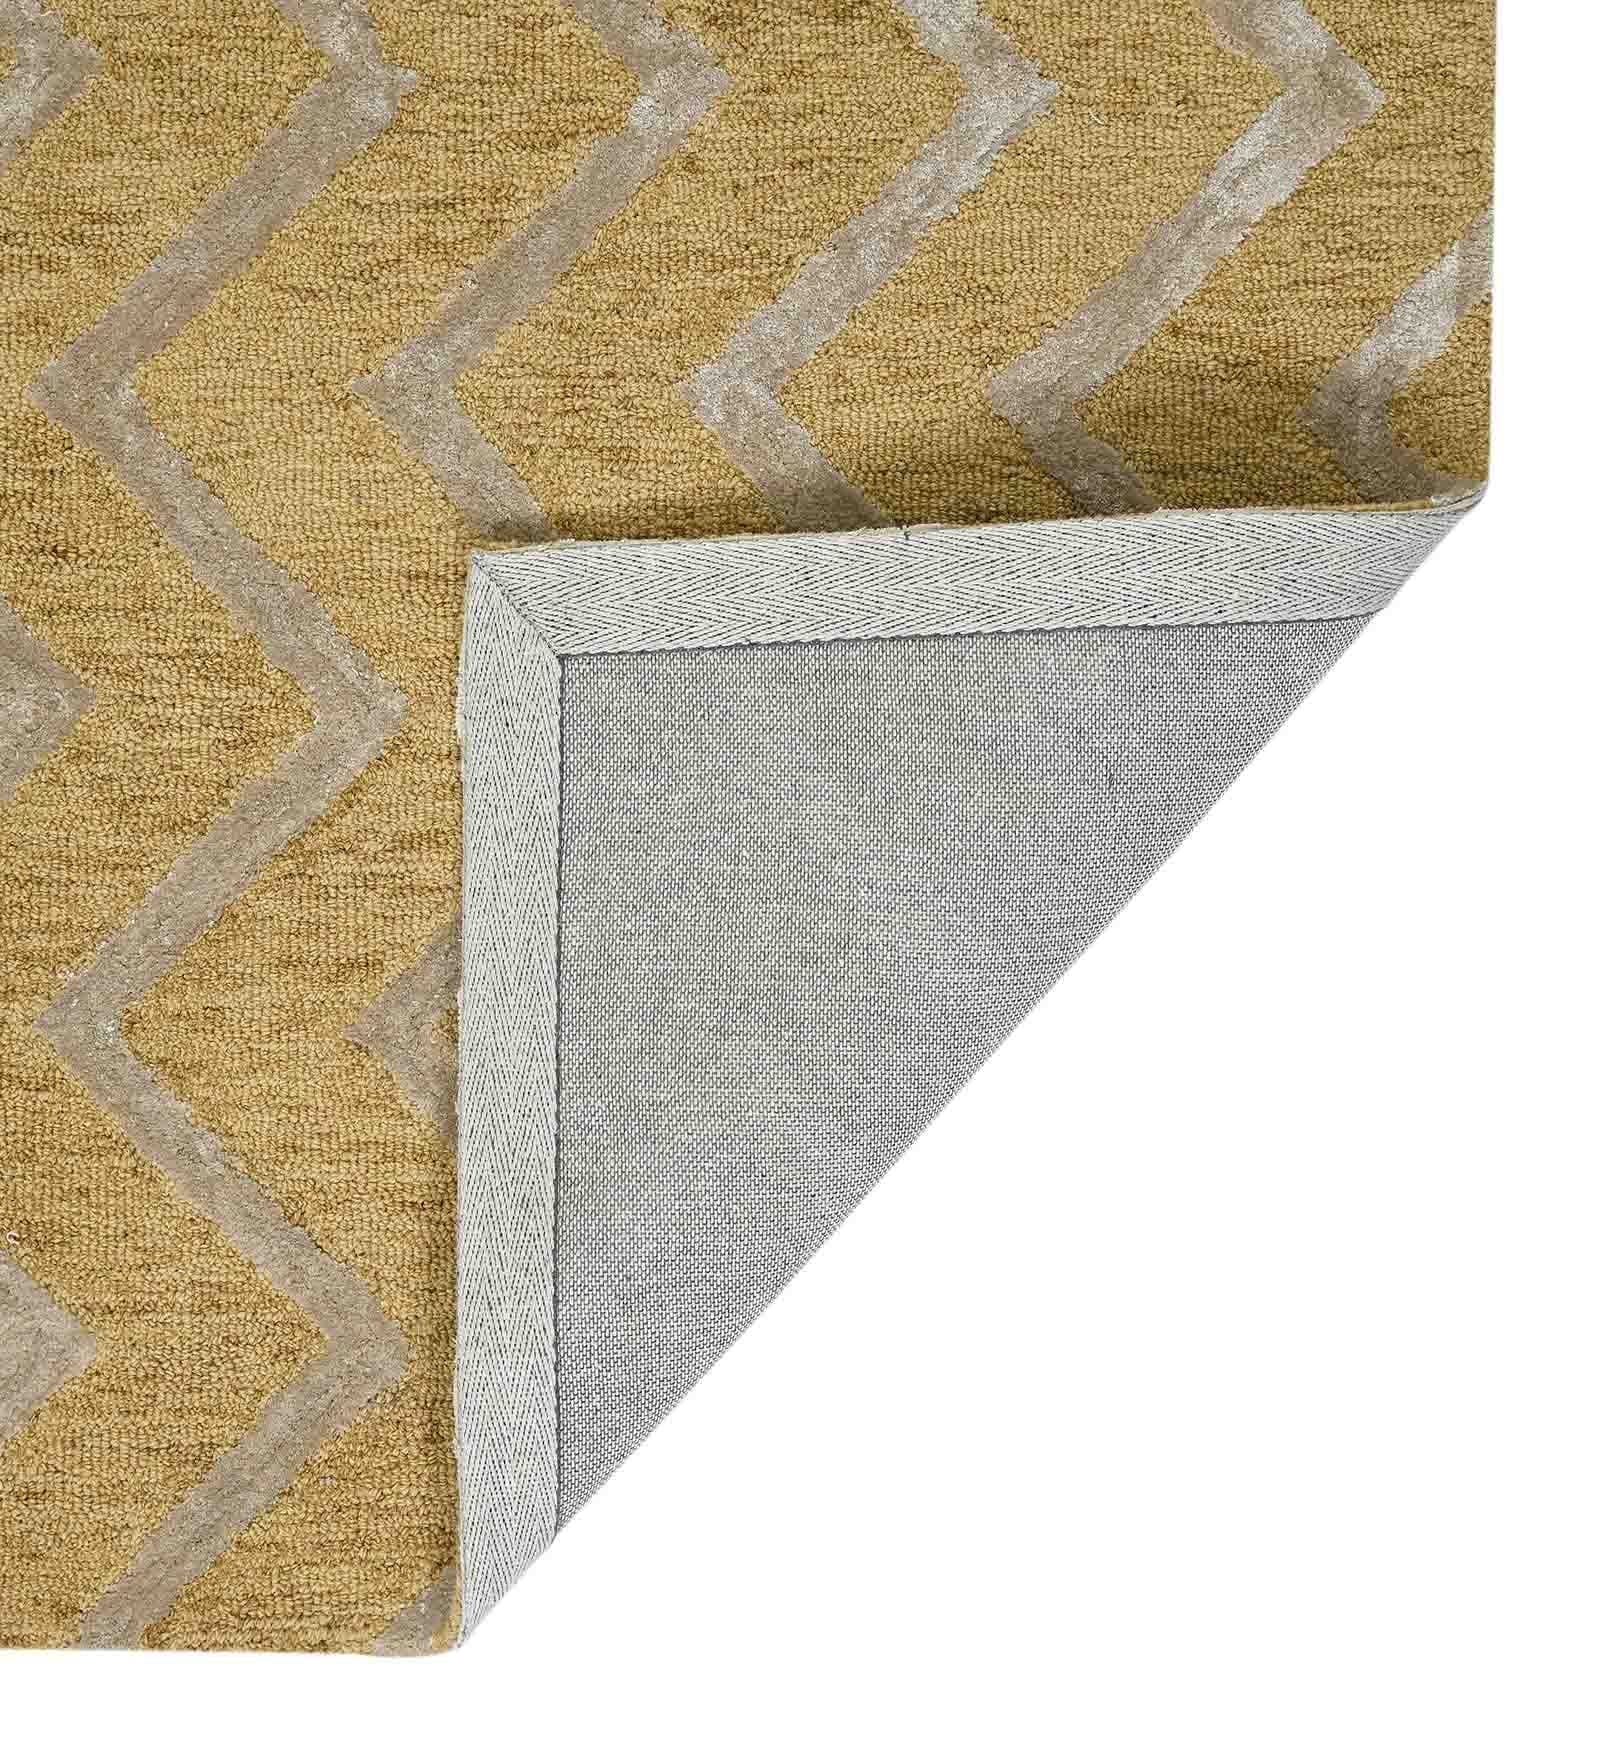 GOLD Wool & Viscose Canyan 5x8 Feet  Hand-Tufted Carpet - Rug